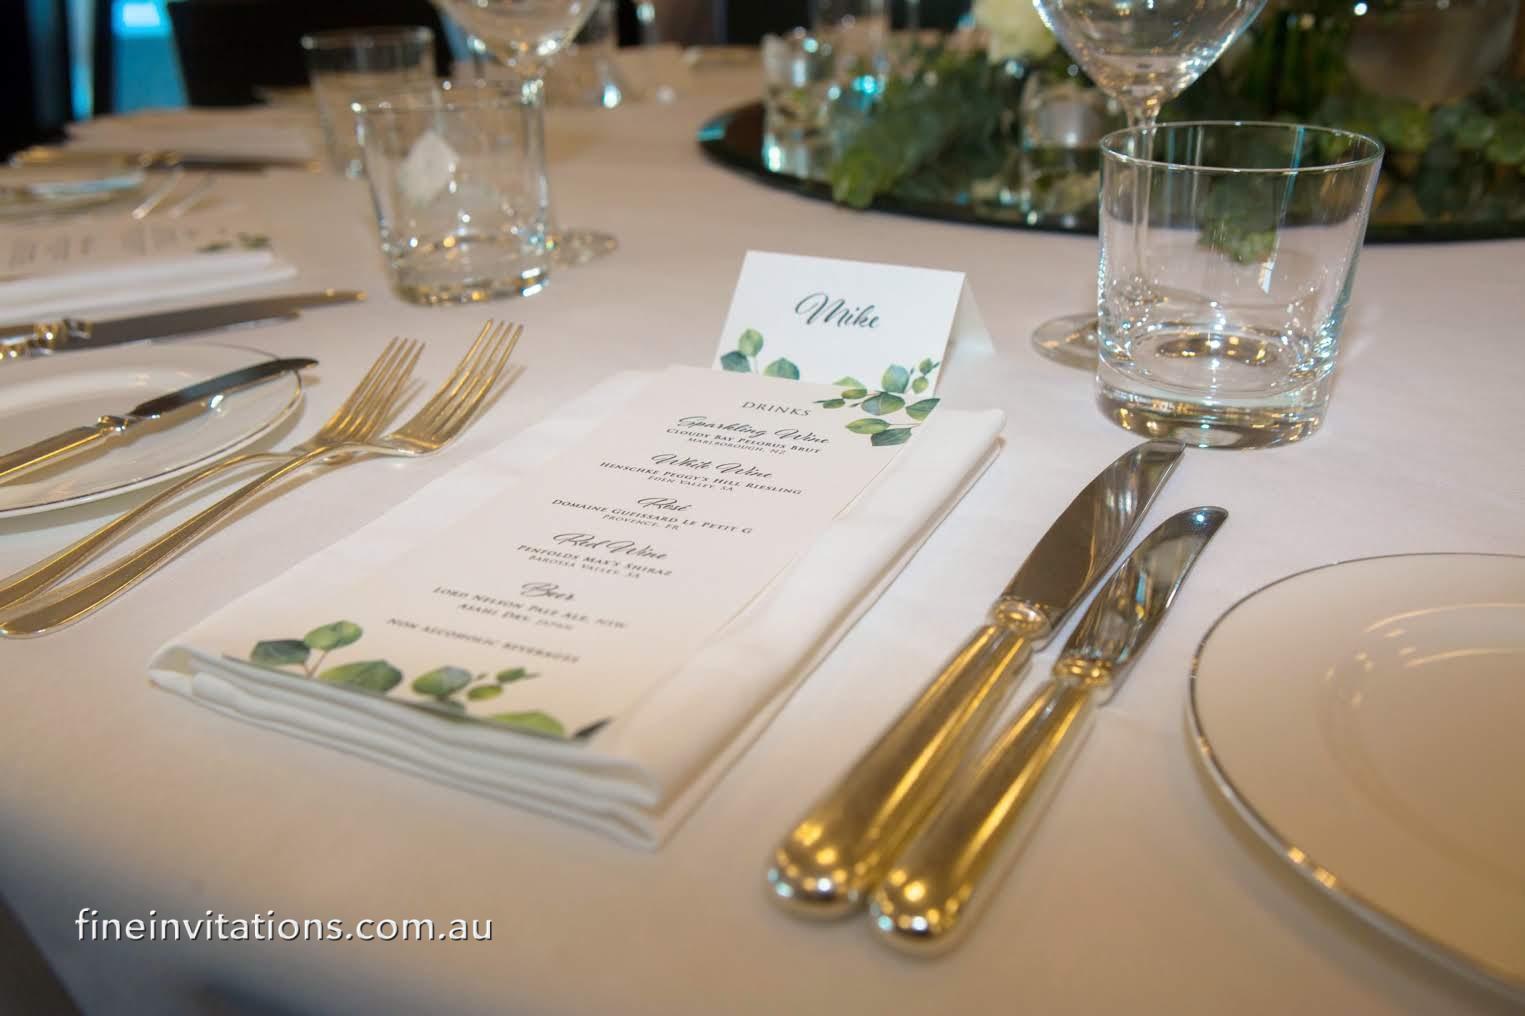 wedding place card and menu eucalyptus design Sydney wedding